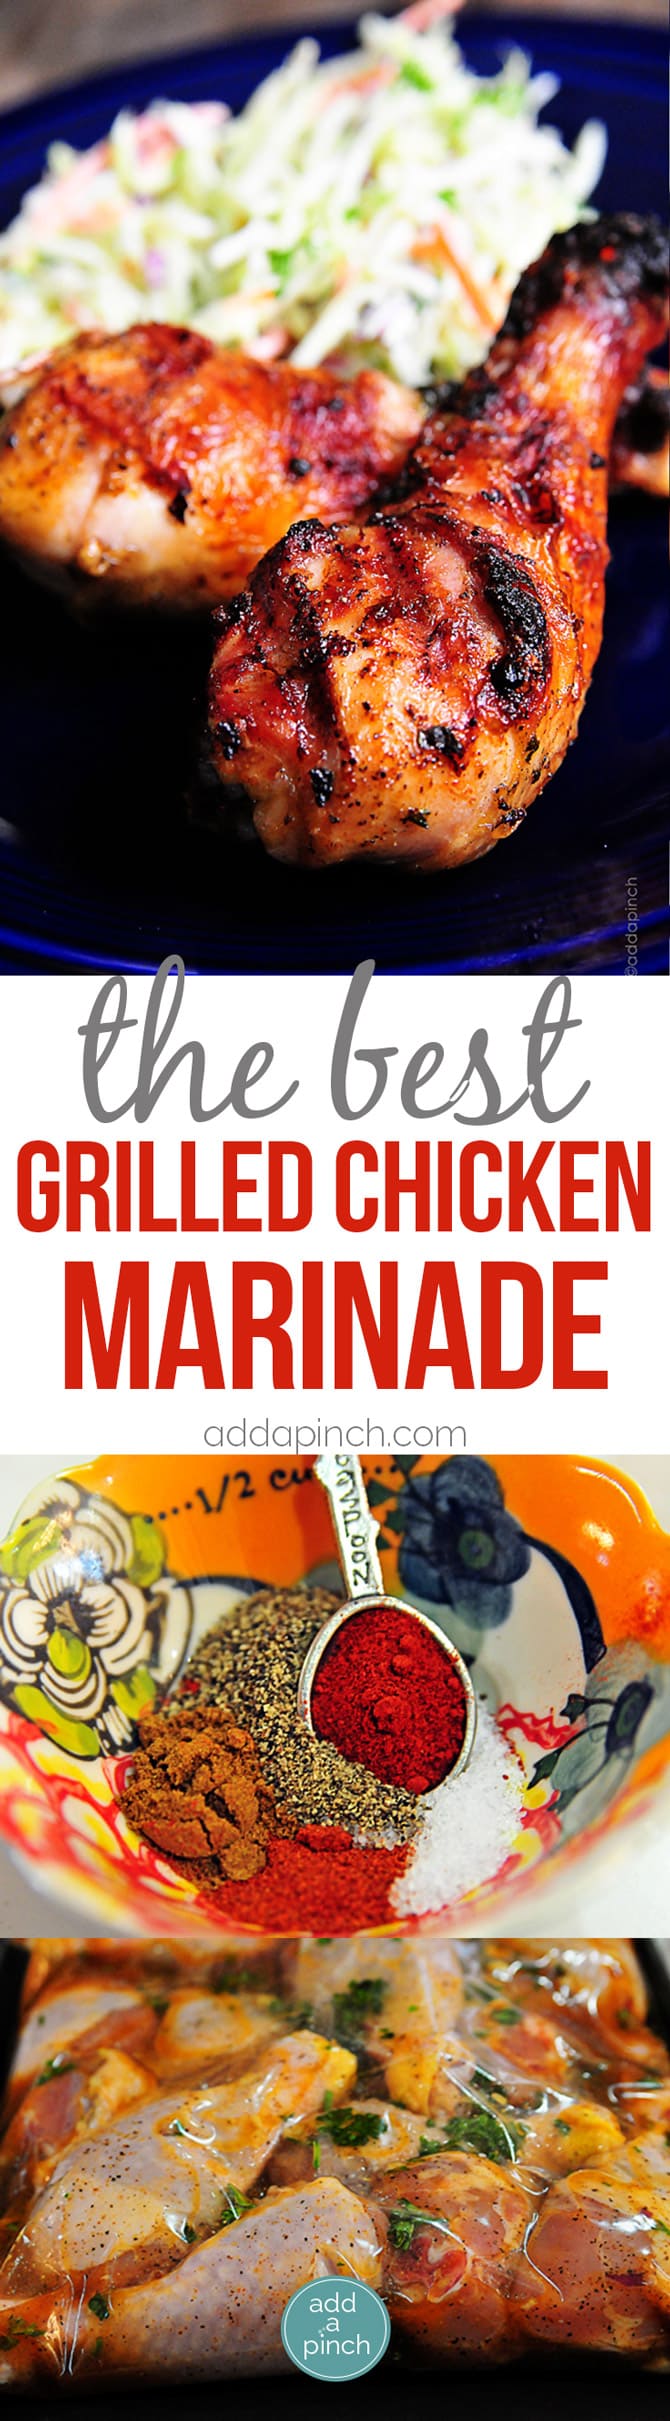 Best Grilled Chicken Marinade Recipe - Grilled Chicken recipes are always a crowd-pleaser. This easy grilled chicken marinade recipe will become a favorite! // addapinch.com